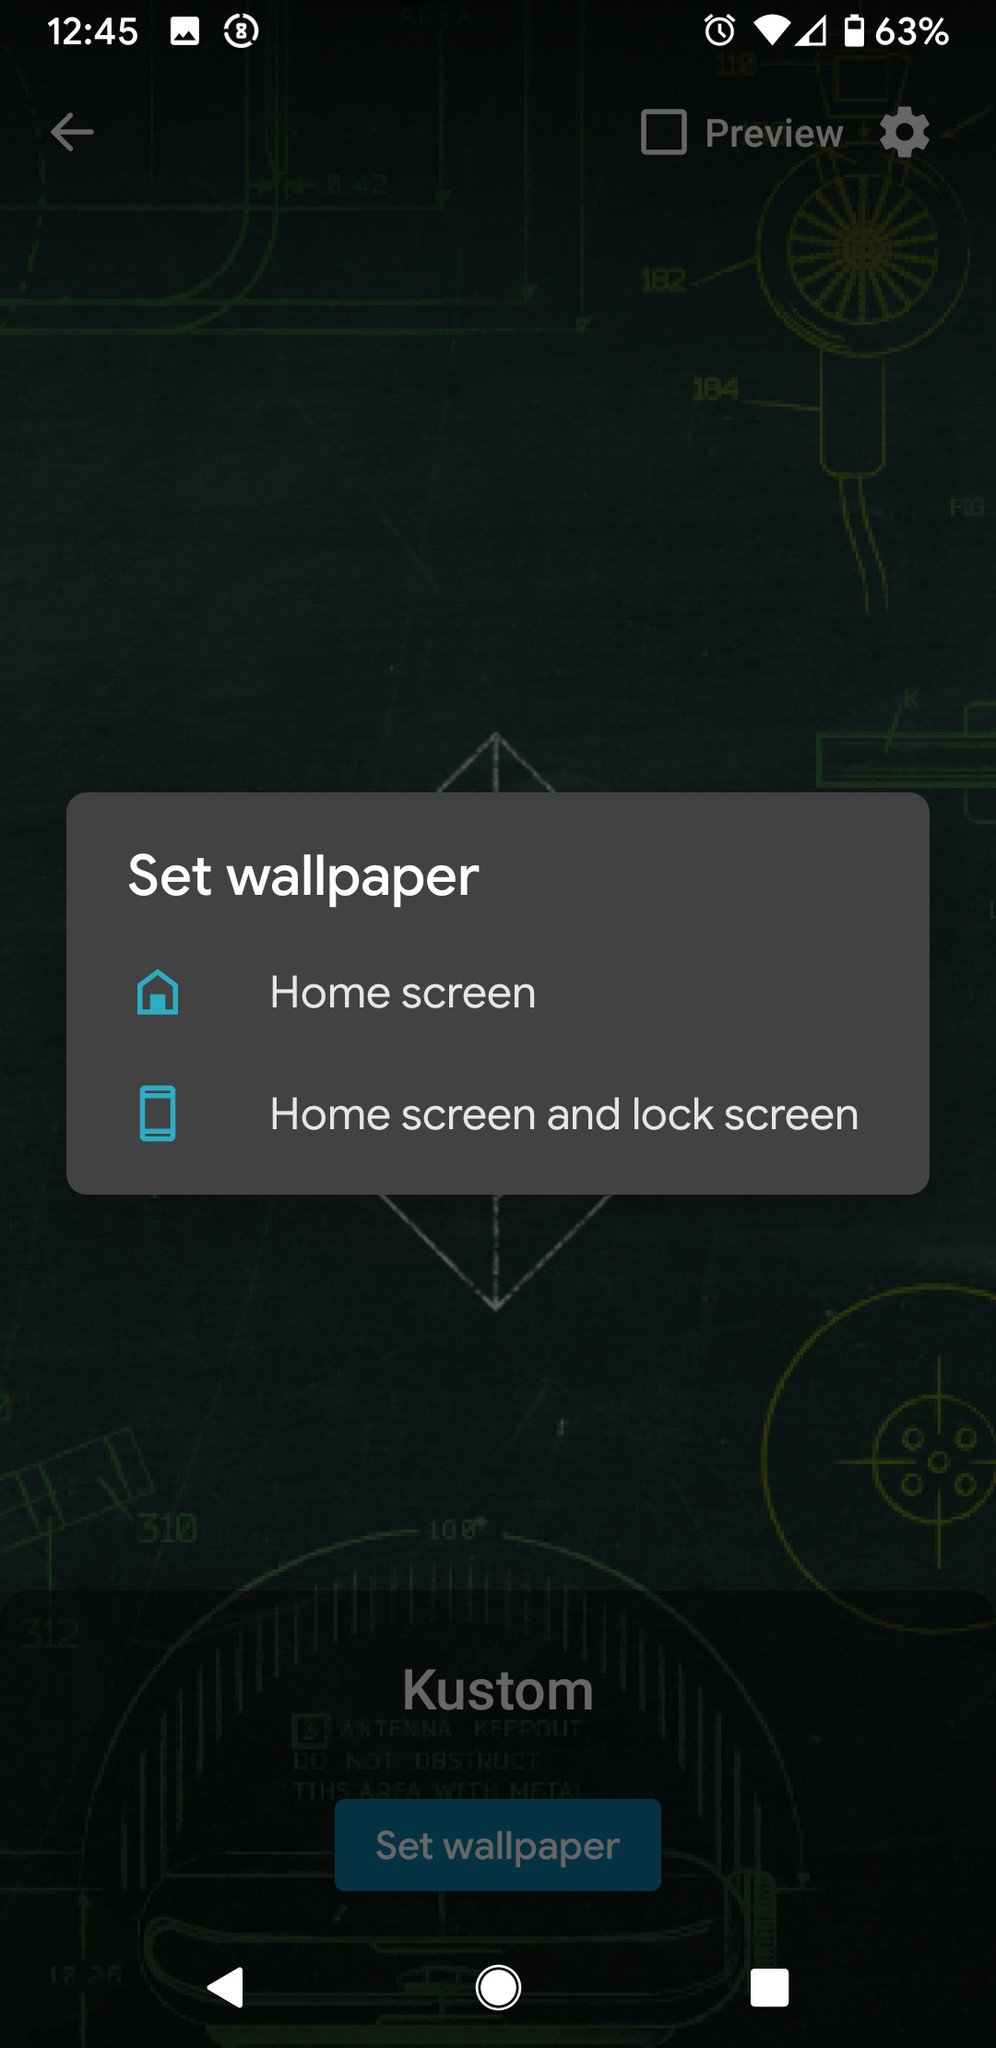 Home screen and lock screen